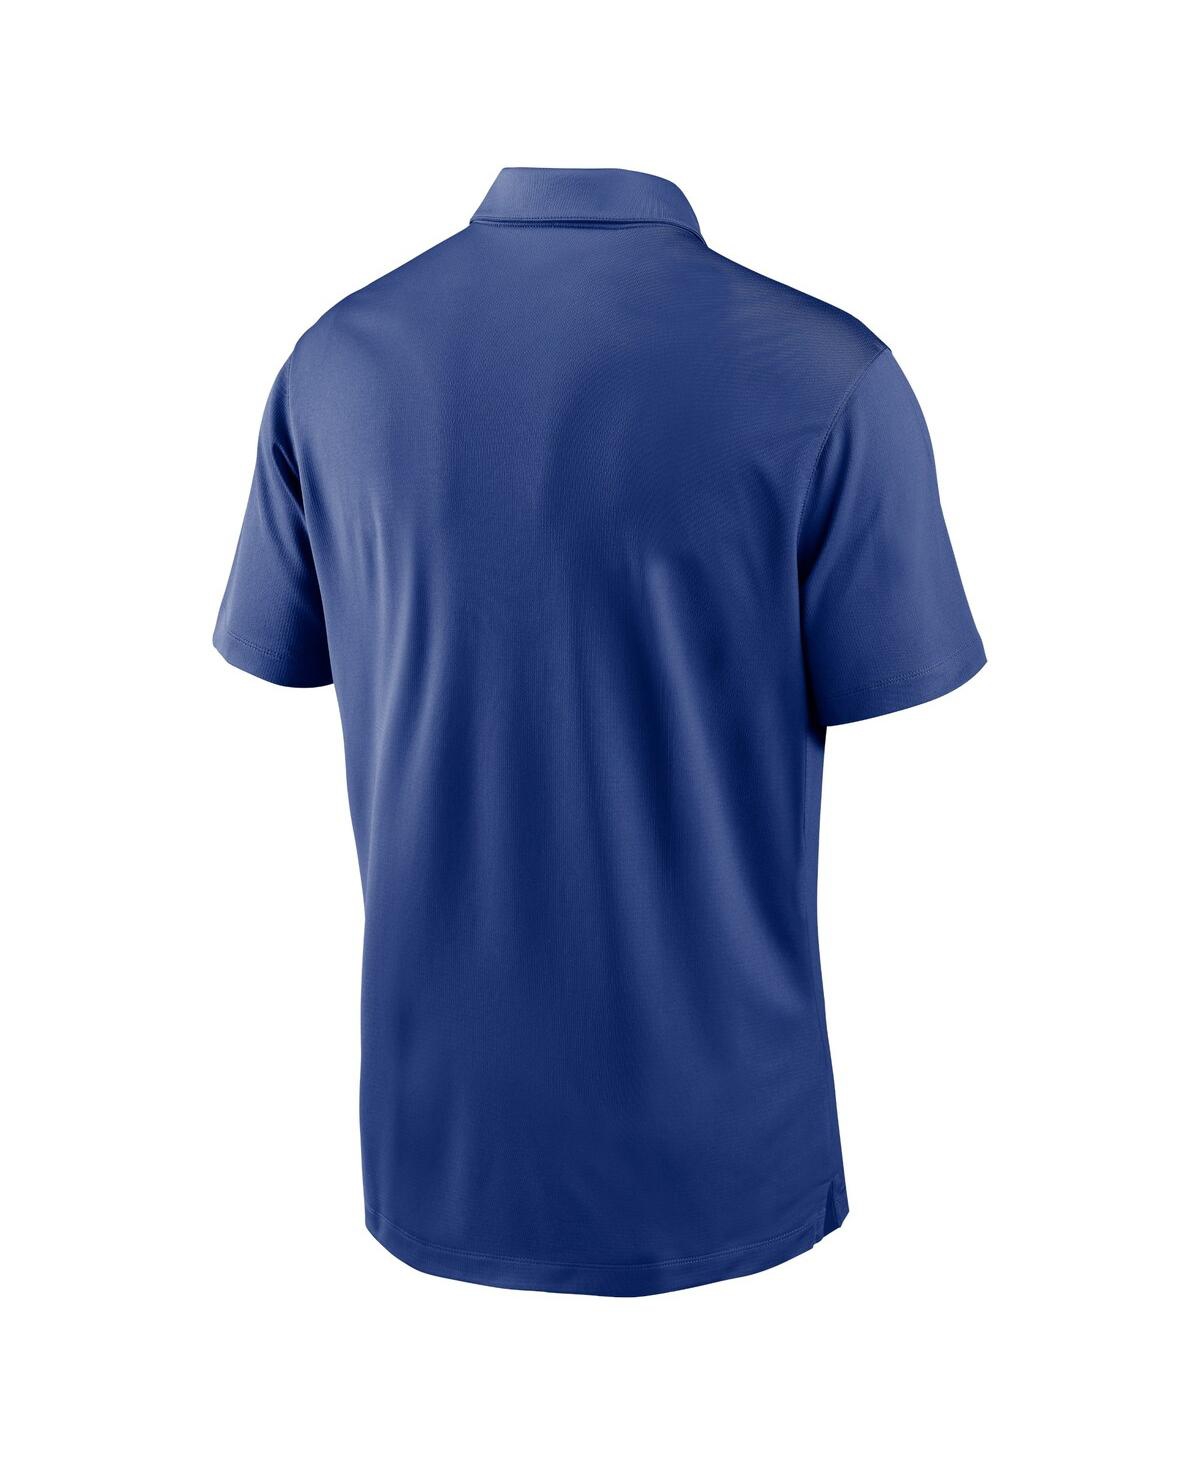 Shop Nike Men's  Royal Toronto Blue Jays Diamond Icon Franchise Performance Polo Shirt